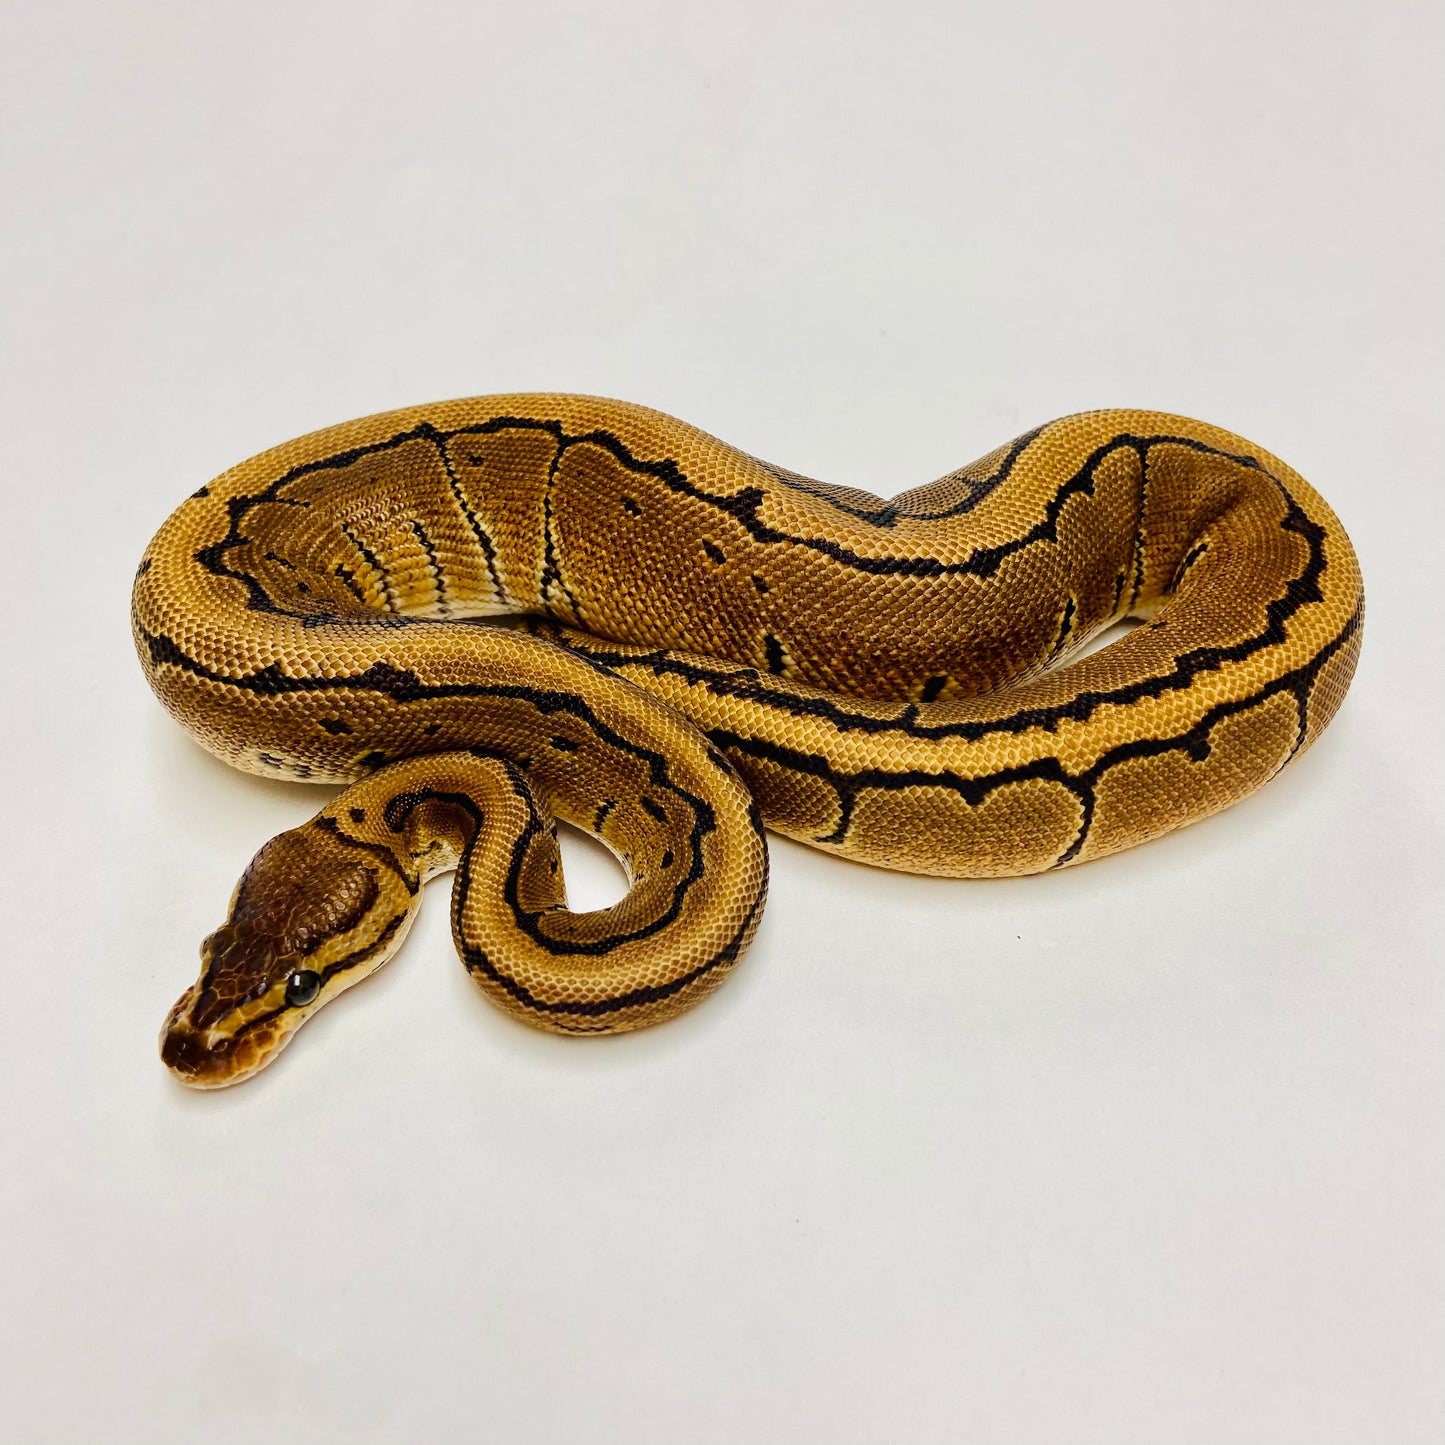 Pinstripe Ball Python- Female #2023F04